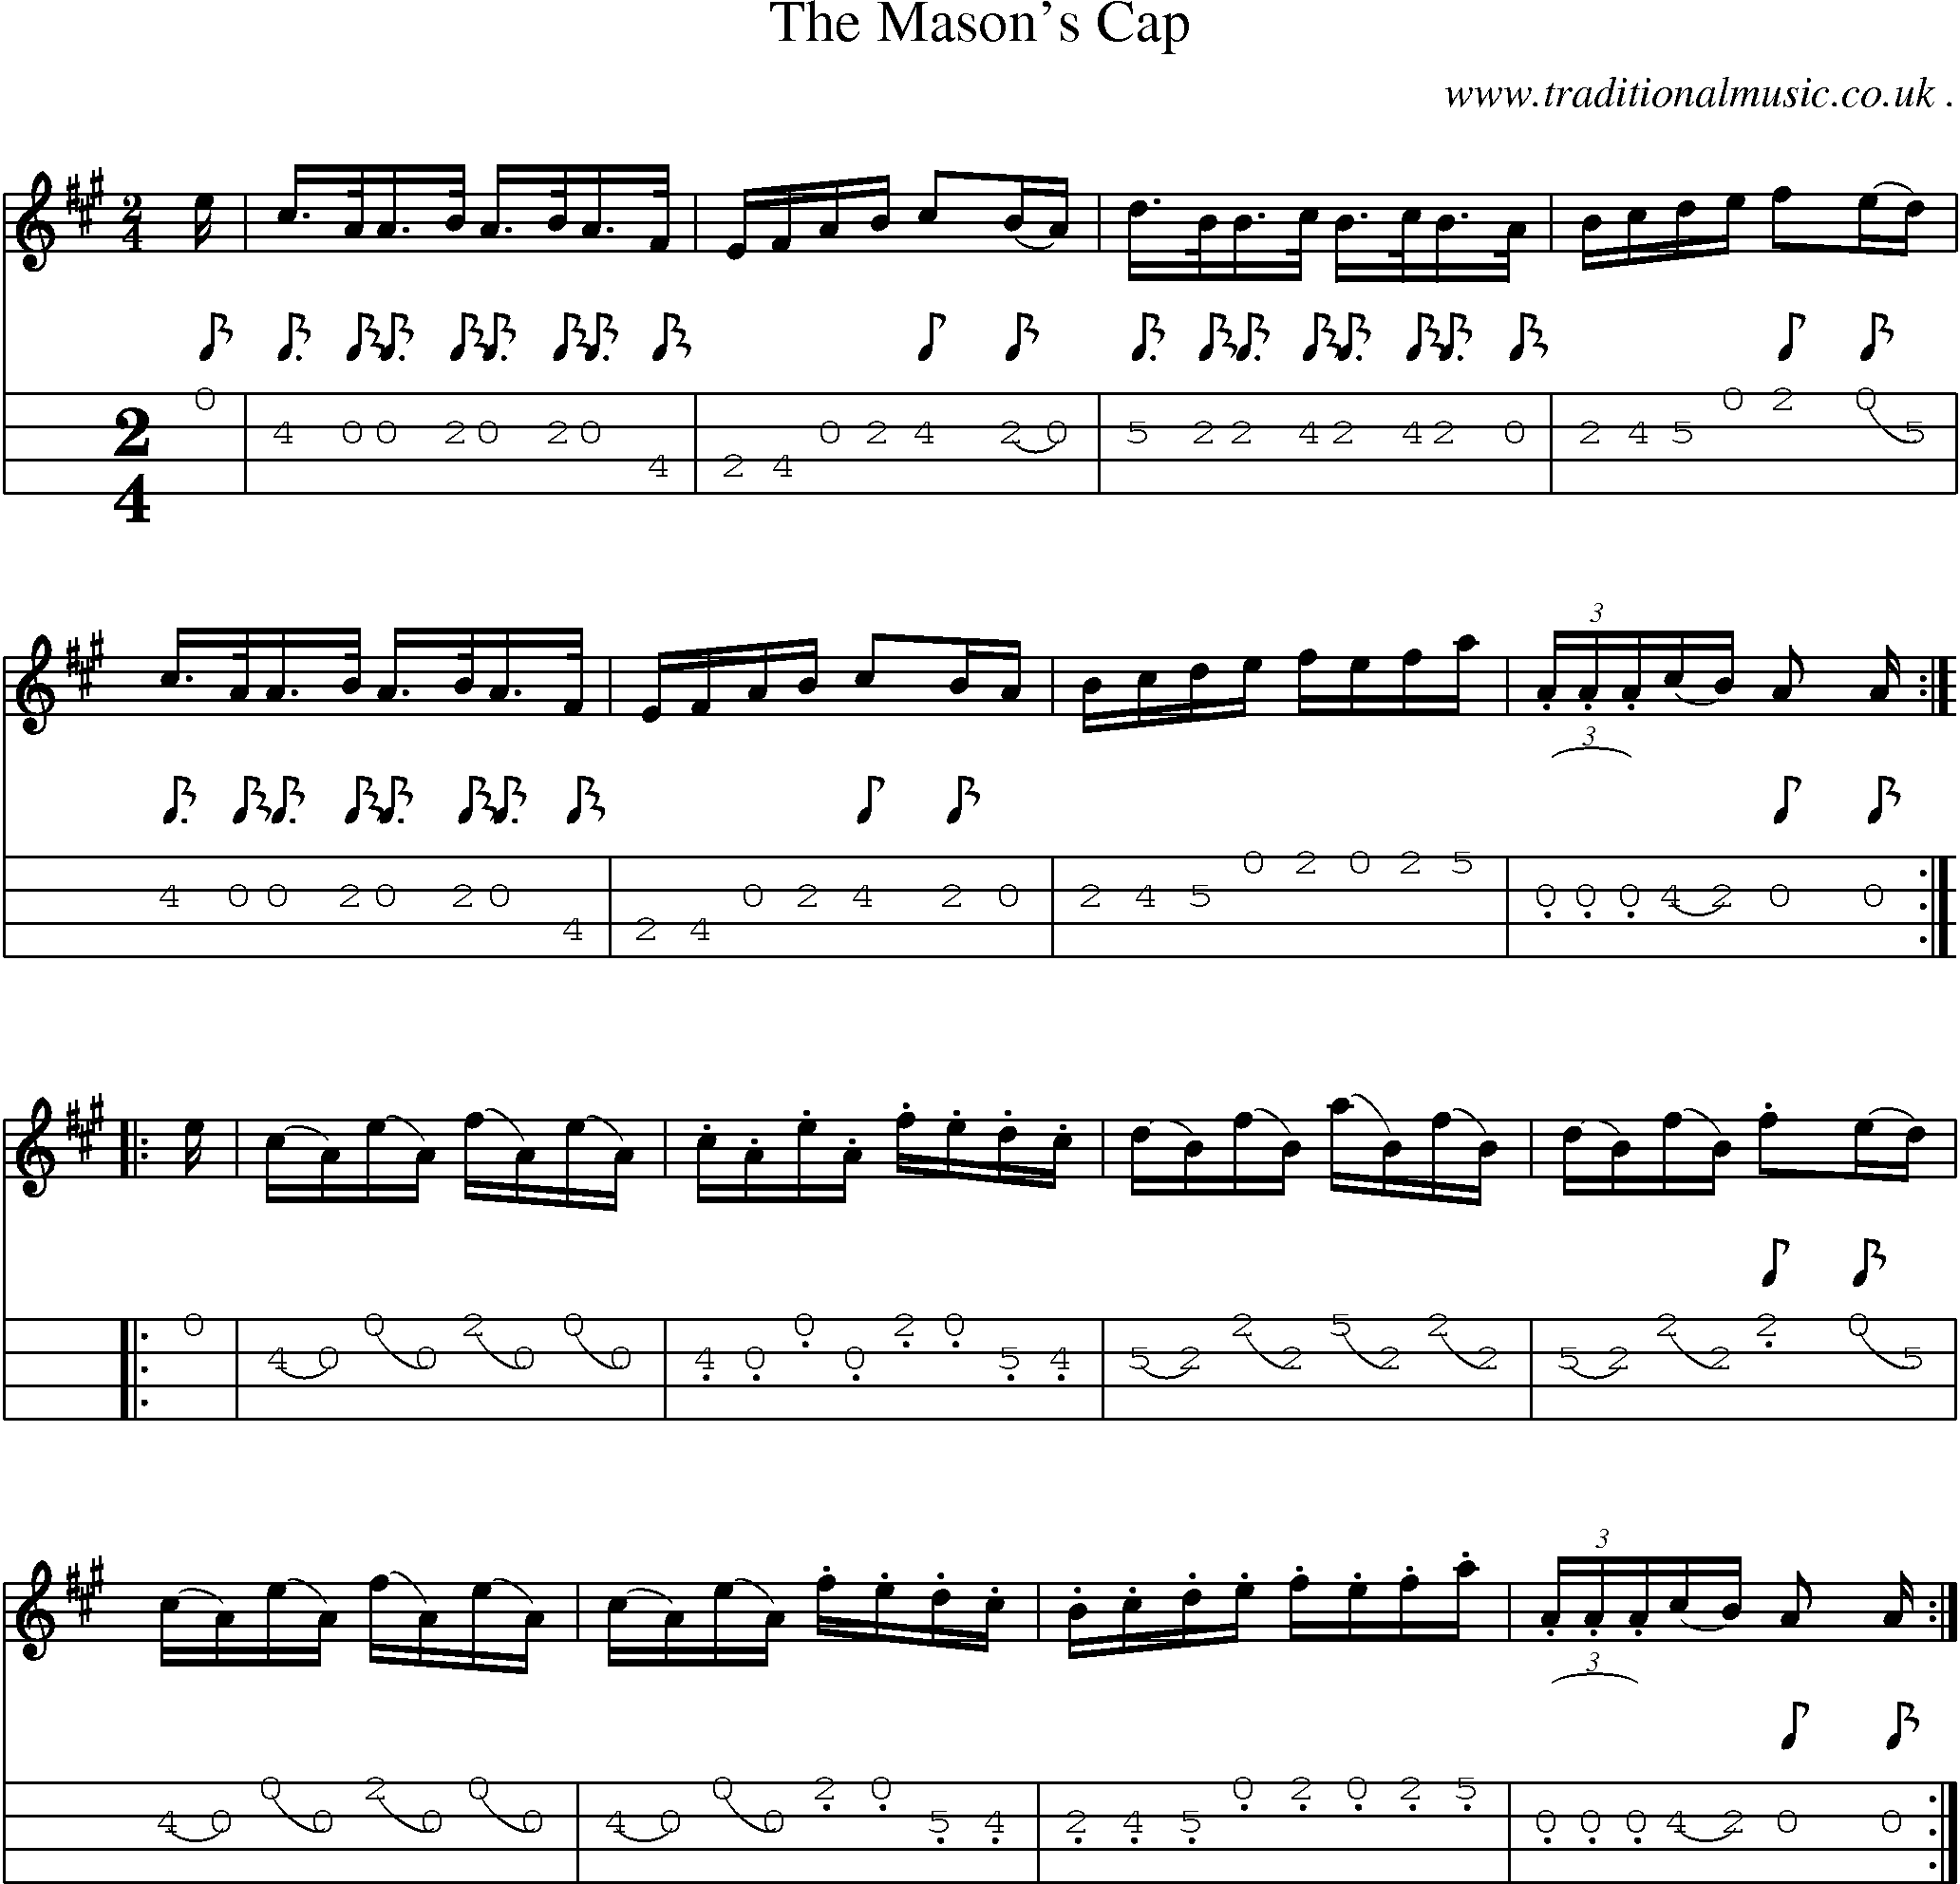 Sheet-Music and Mandolin Tabs for The Masons Cap